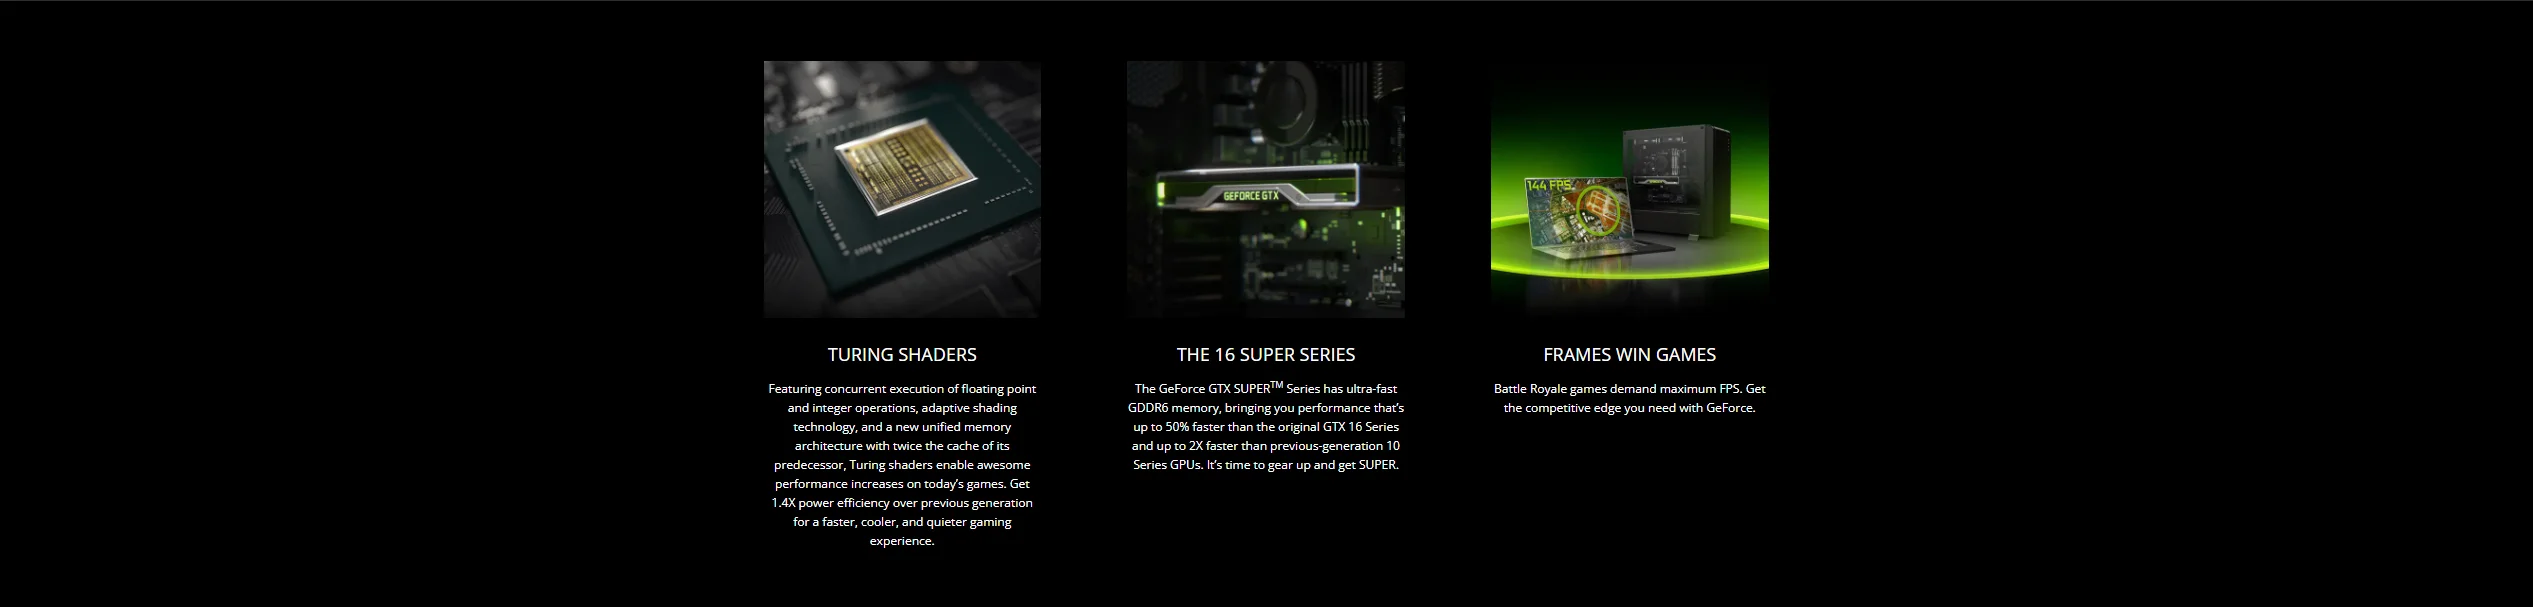 MSI GeForce GTX 1660 SUPER GAMING X NEW 1660 1660S 12nm 6G GDDR6 192bit  Video Cards GPU Graphic Card DeskTop CPU Motherboard gpu computer